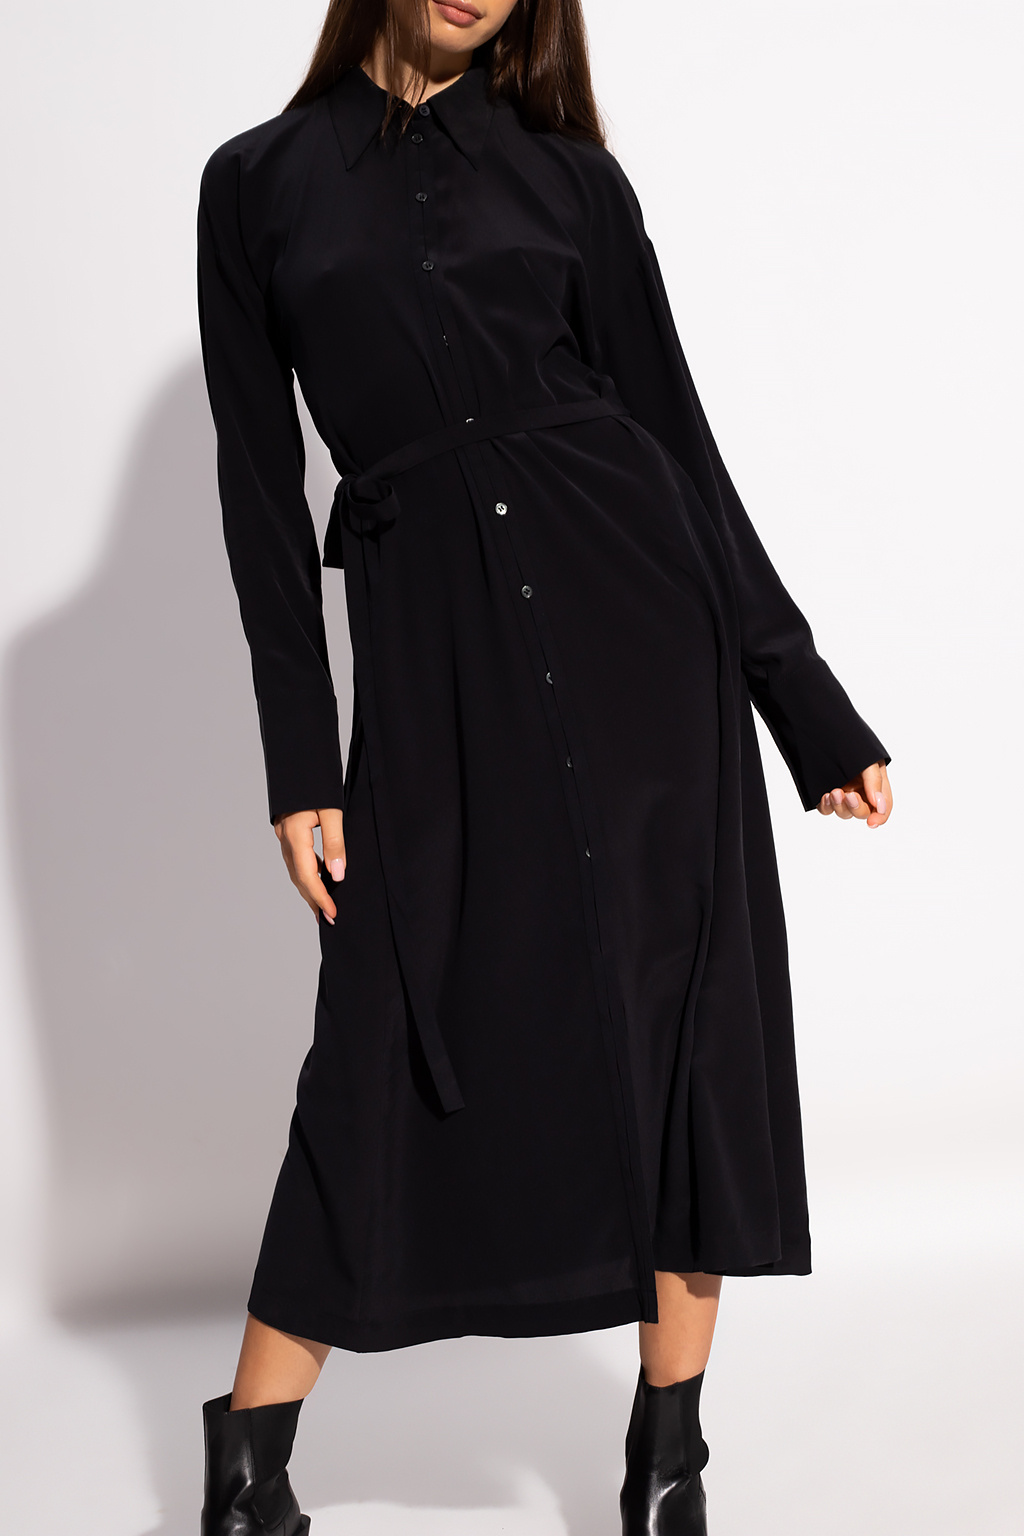 Acne Studios Silk dress